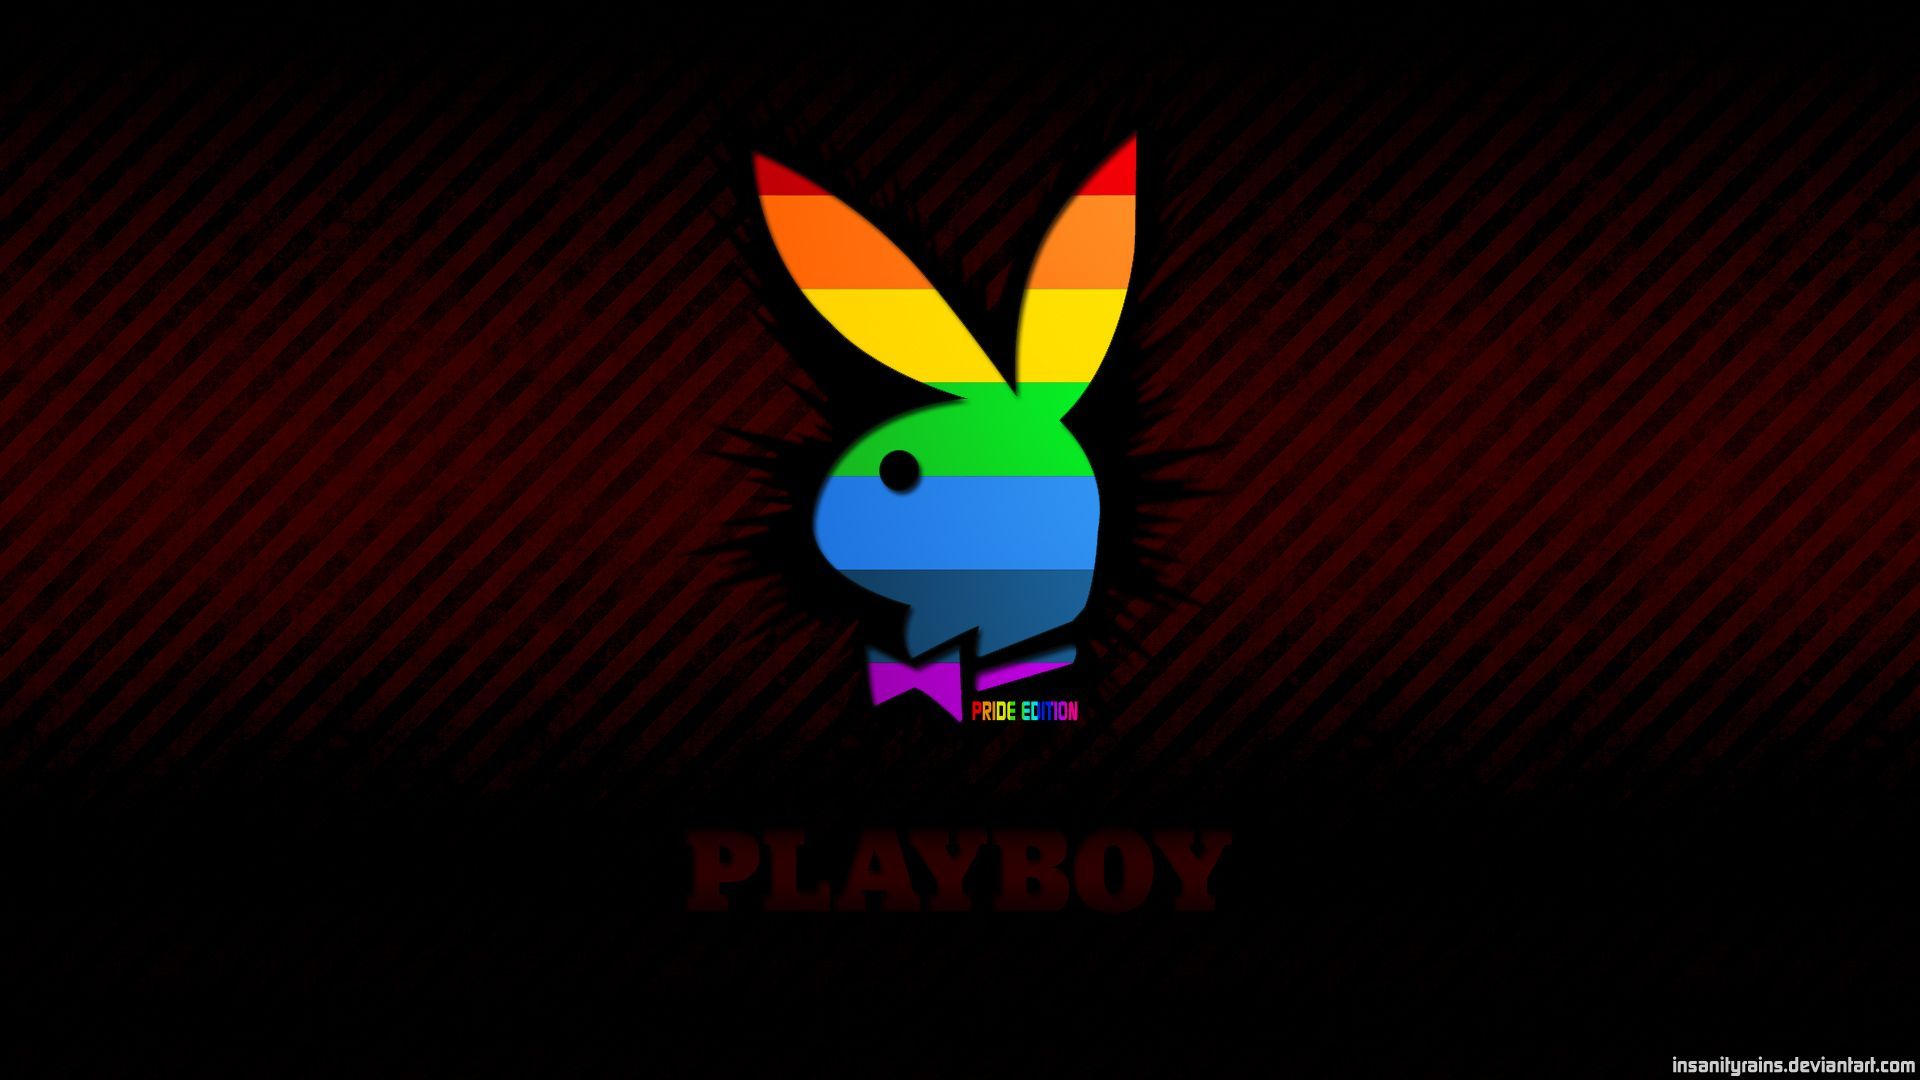 Playboy HD Wallpaper